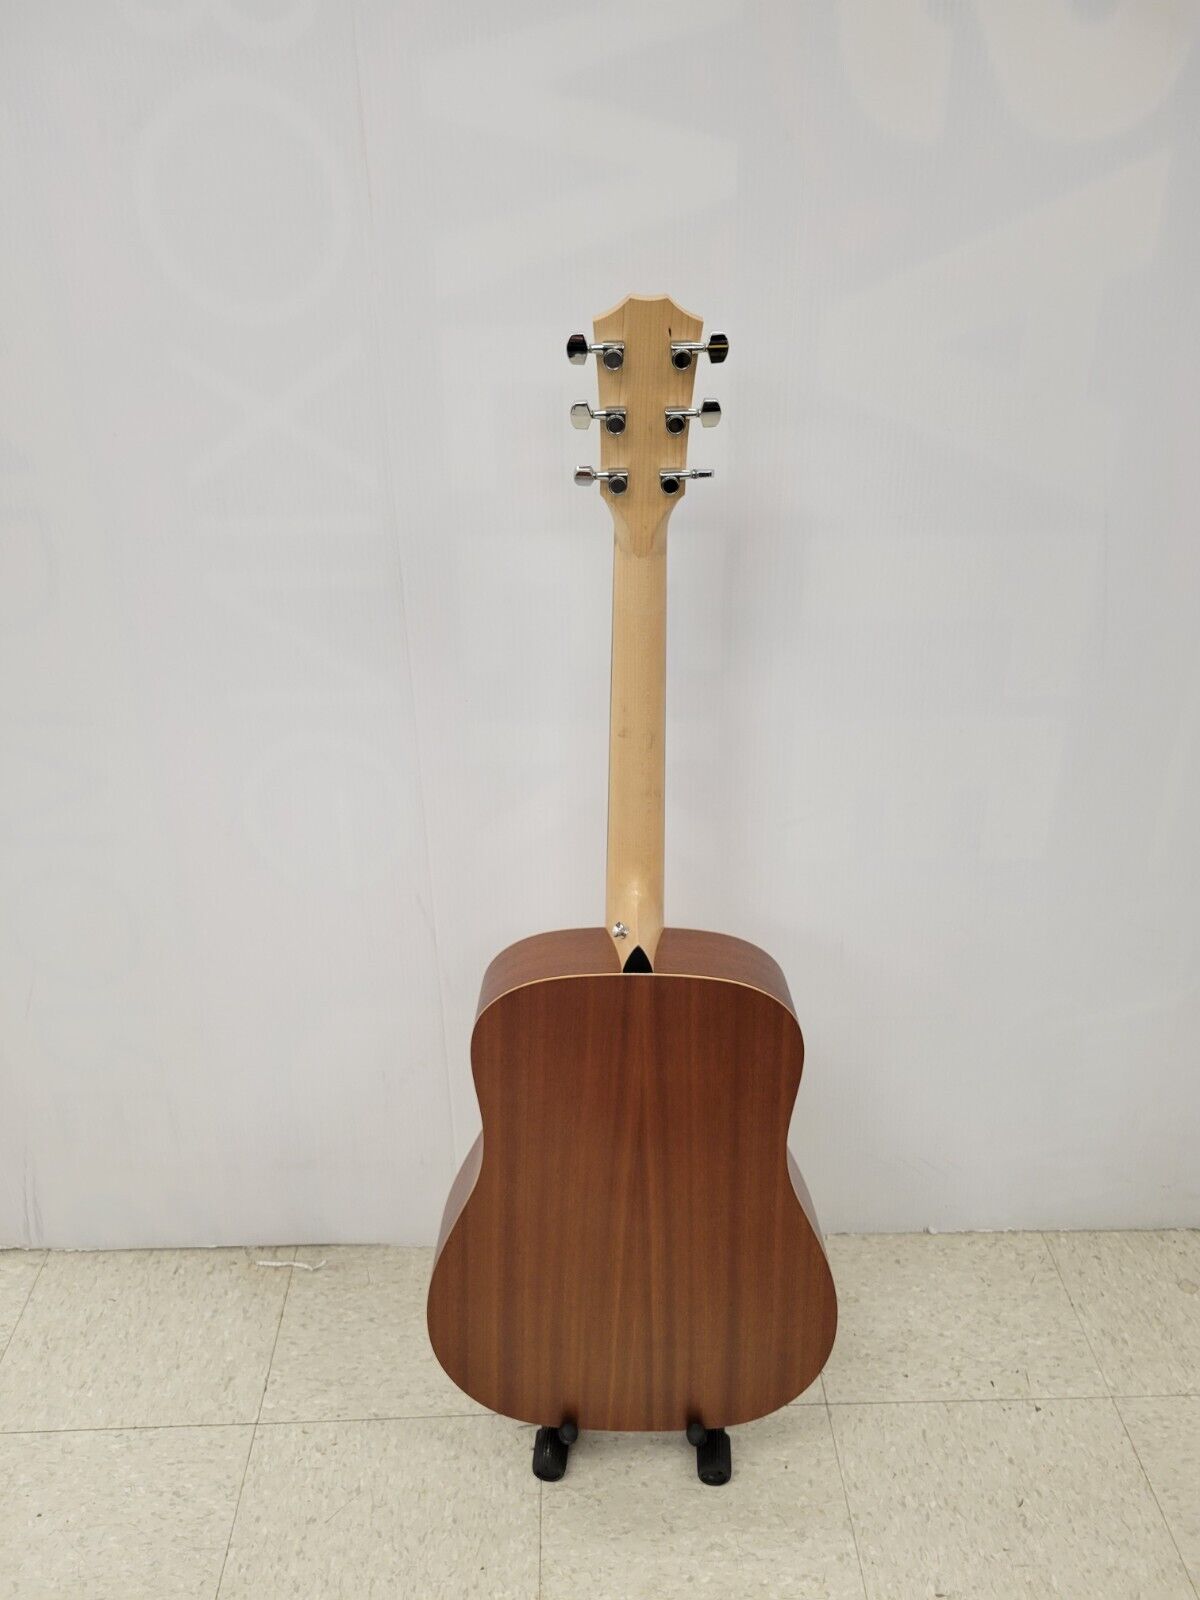 (46217-1) Taylor Academy 10C Acoustic Guitar